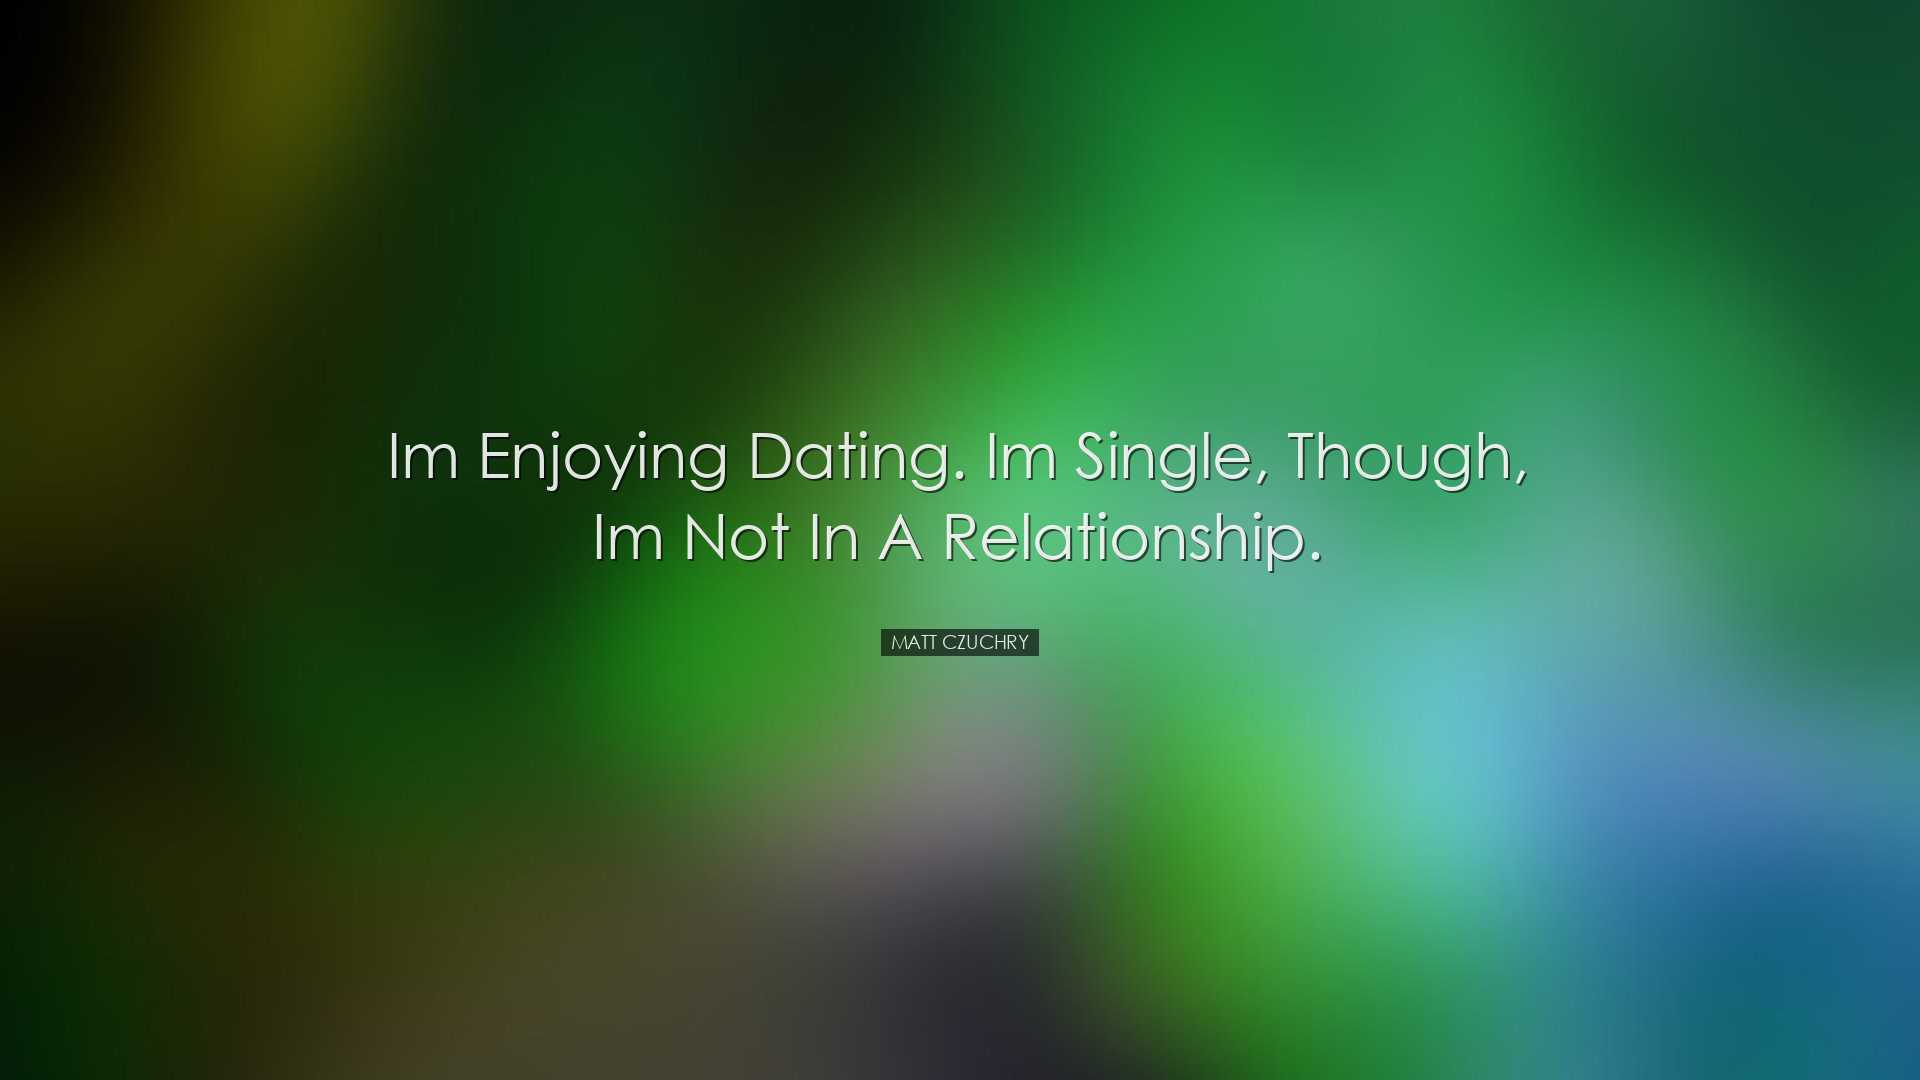 Im enjoying dating. Im single, though, Im not in a relationship. -